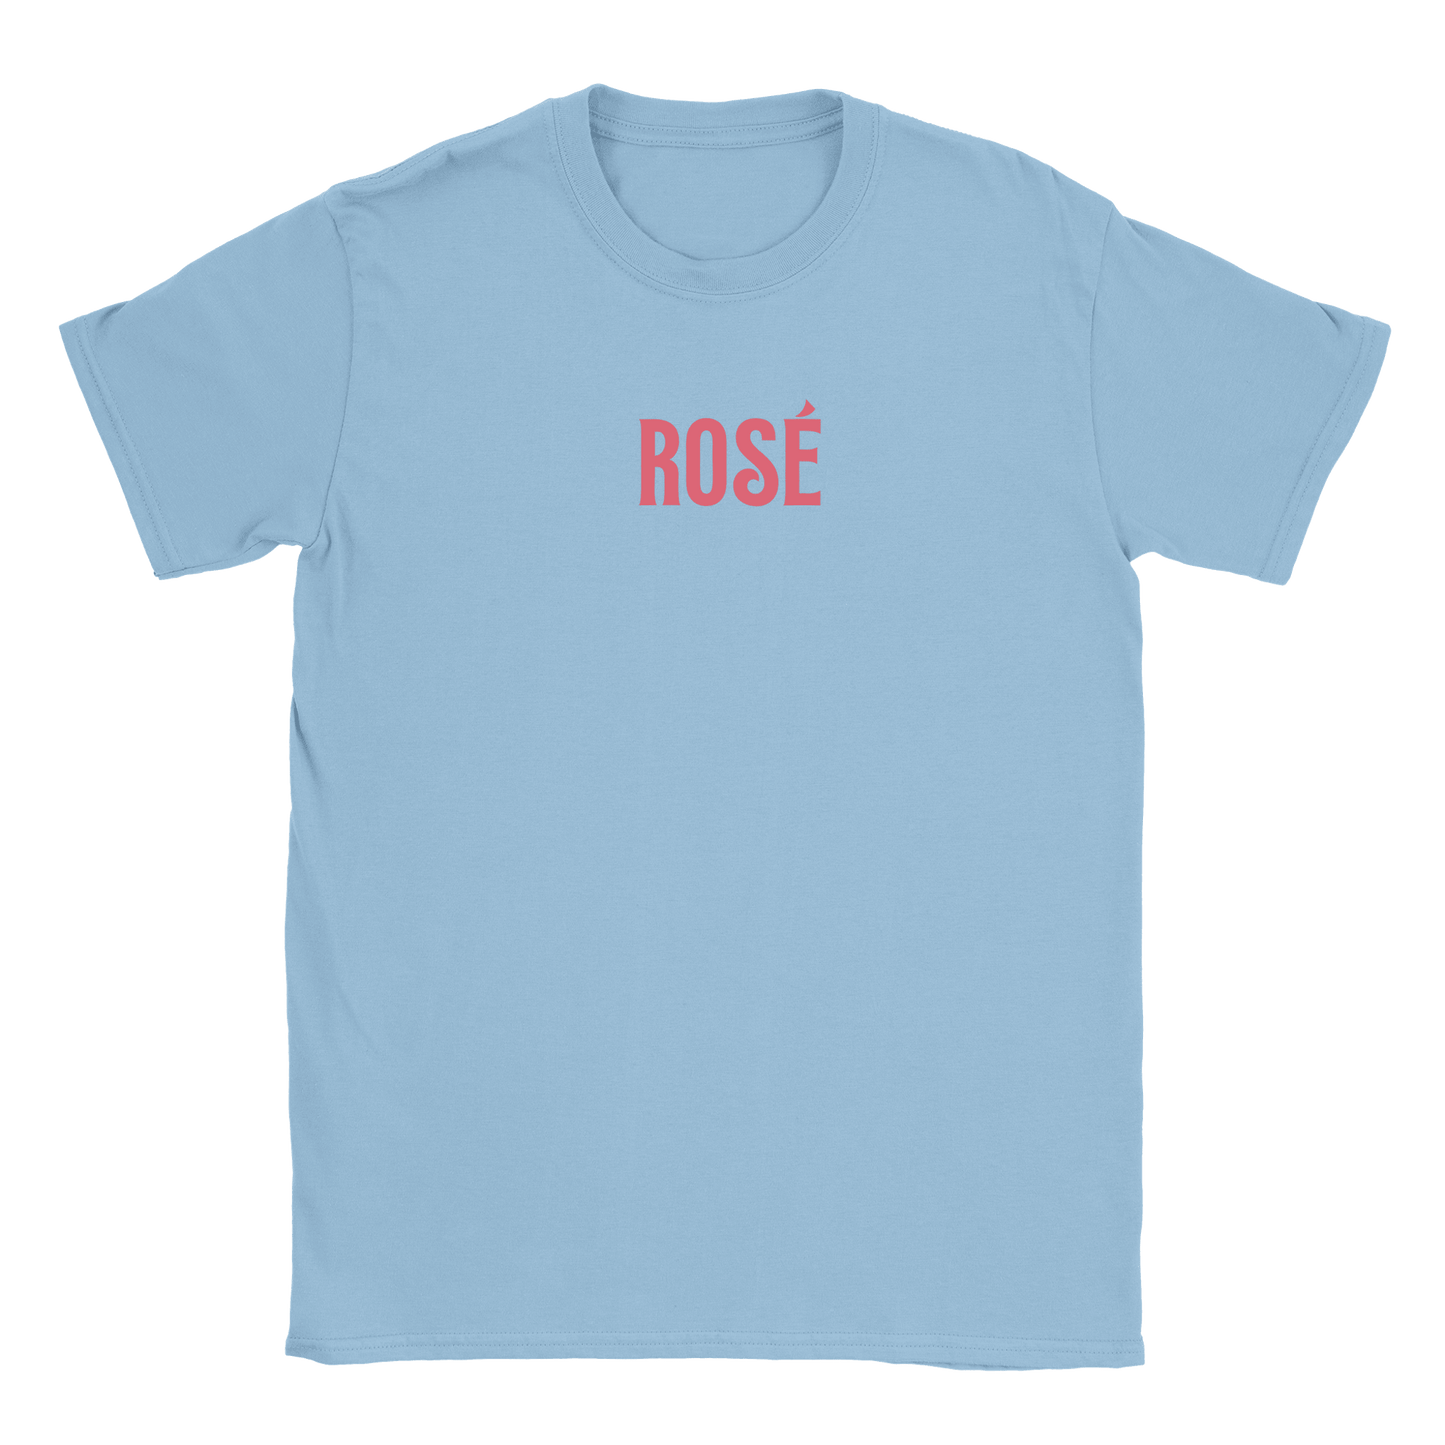 Rosé - T-shirt Ljusblå